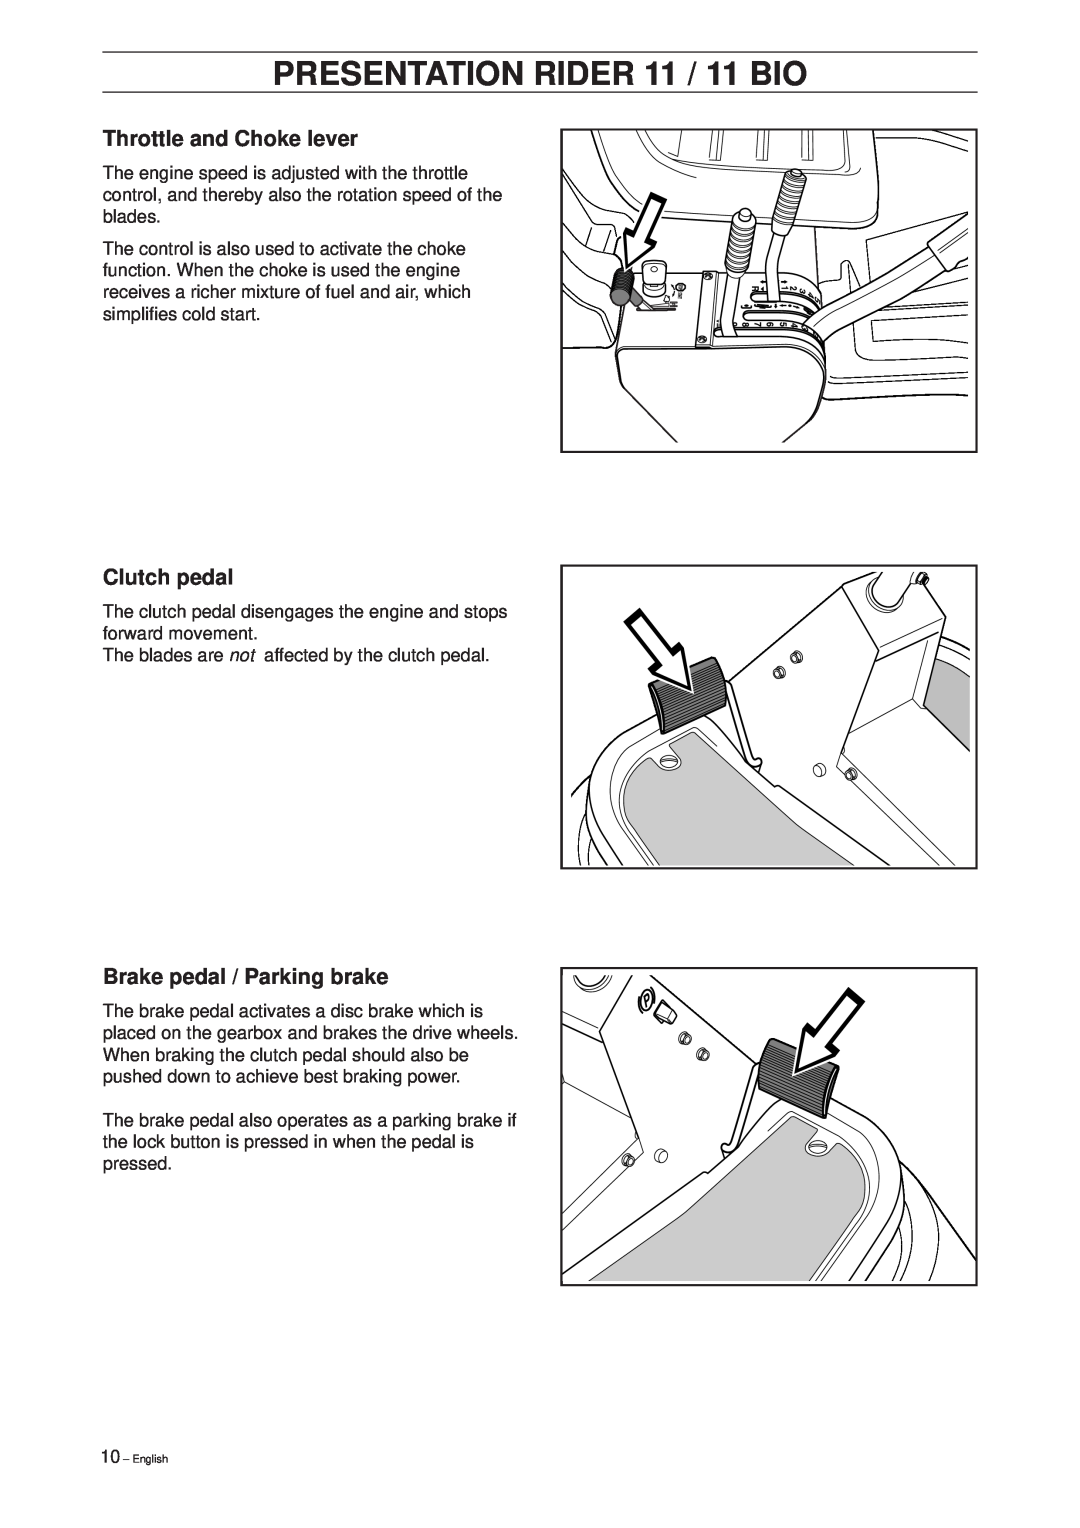 Husqvarna 11 Bio manual PRESENTATION RIDER 11 / 11 BIO, Throttle and Choke lever, Clutch pedal, Brake pedal / Parking brake 